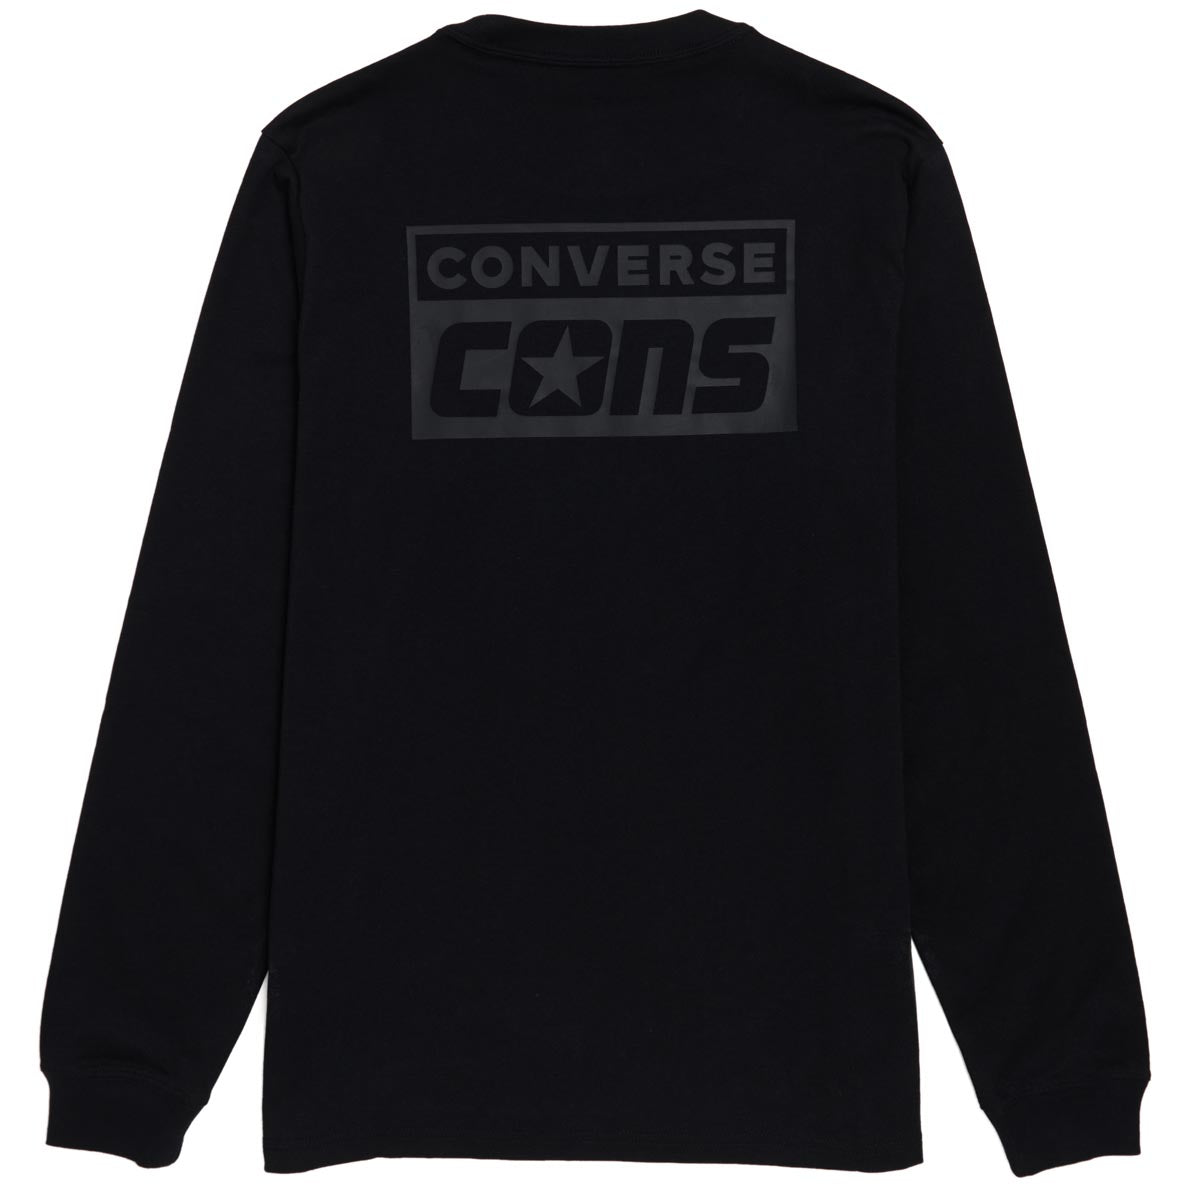 Converse Long Sleeve T-Shirt - Black image 2